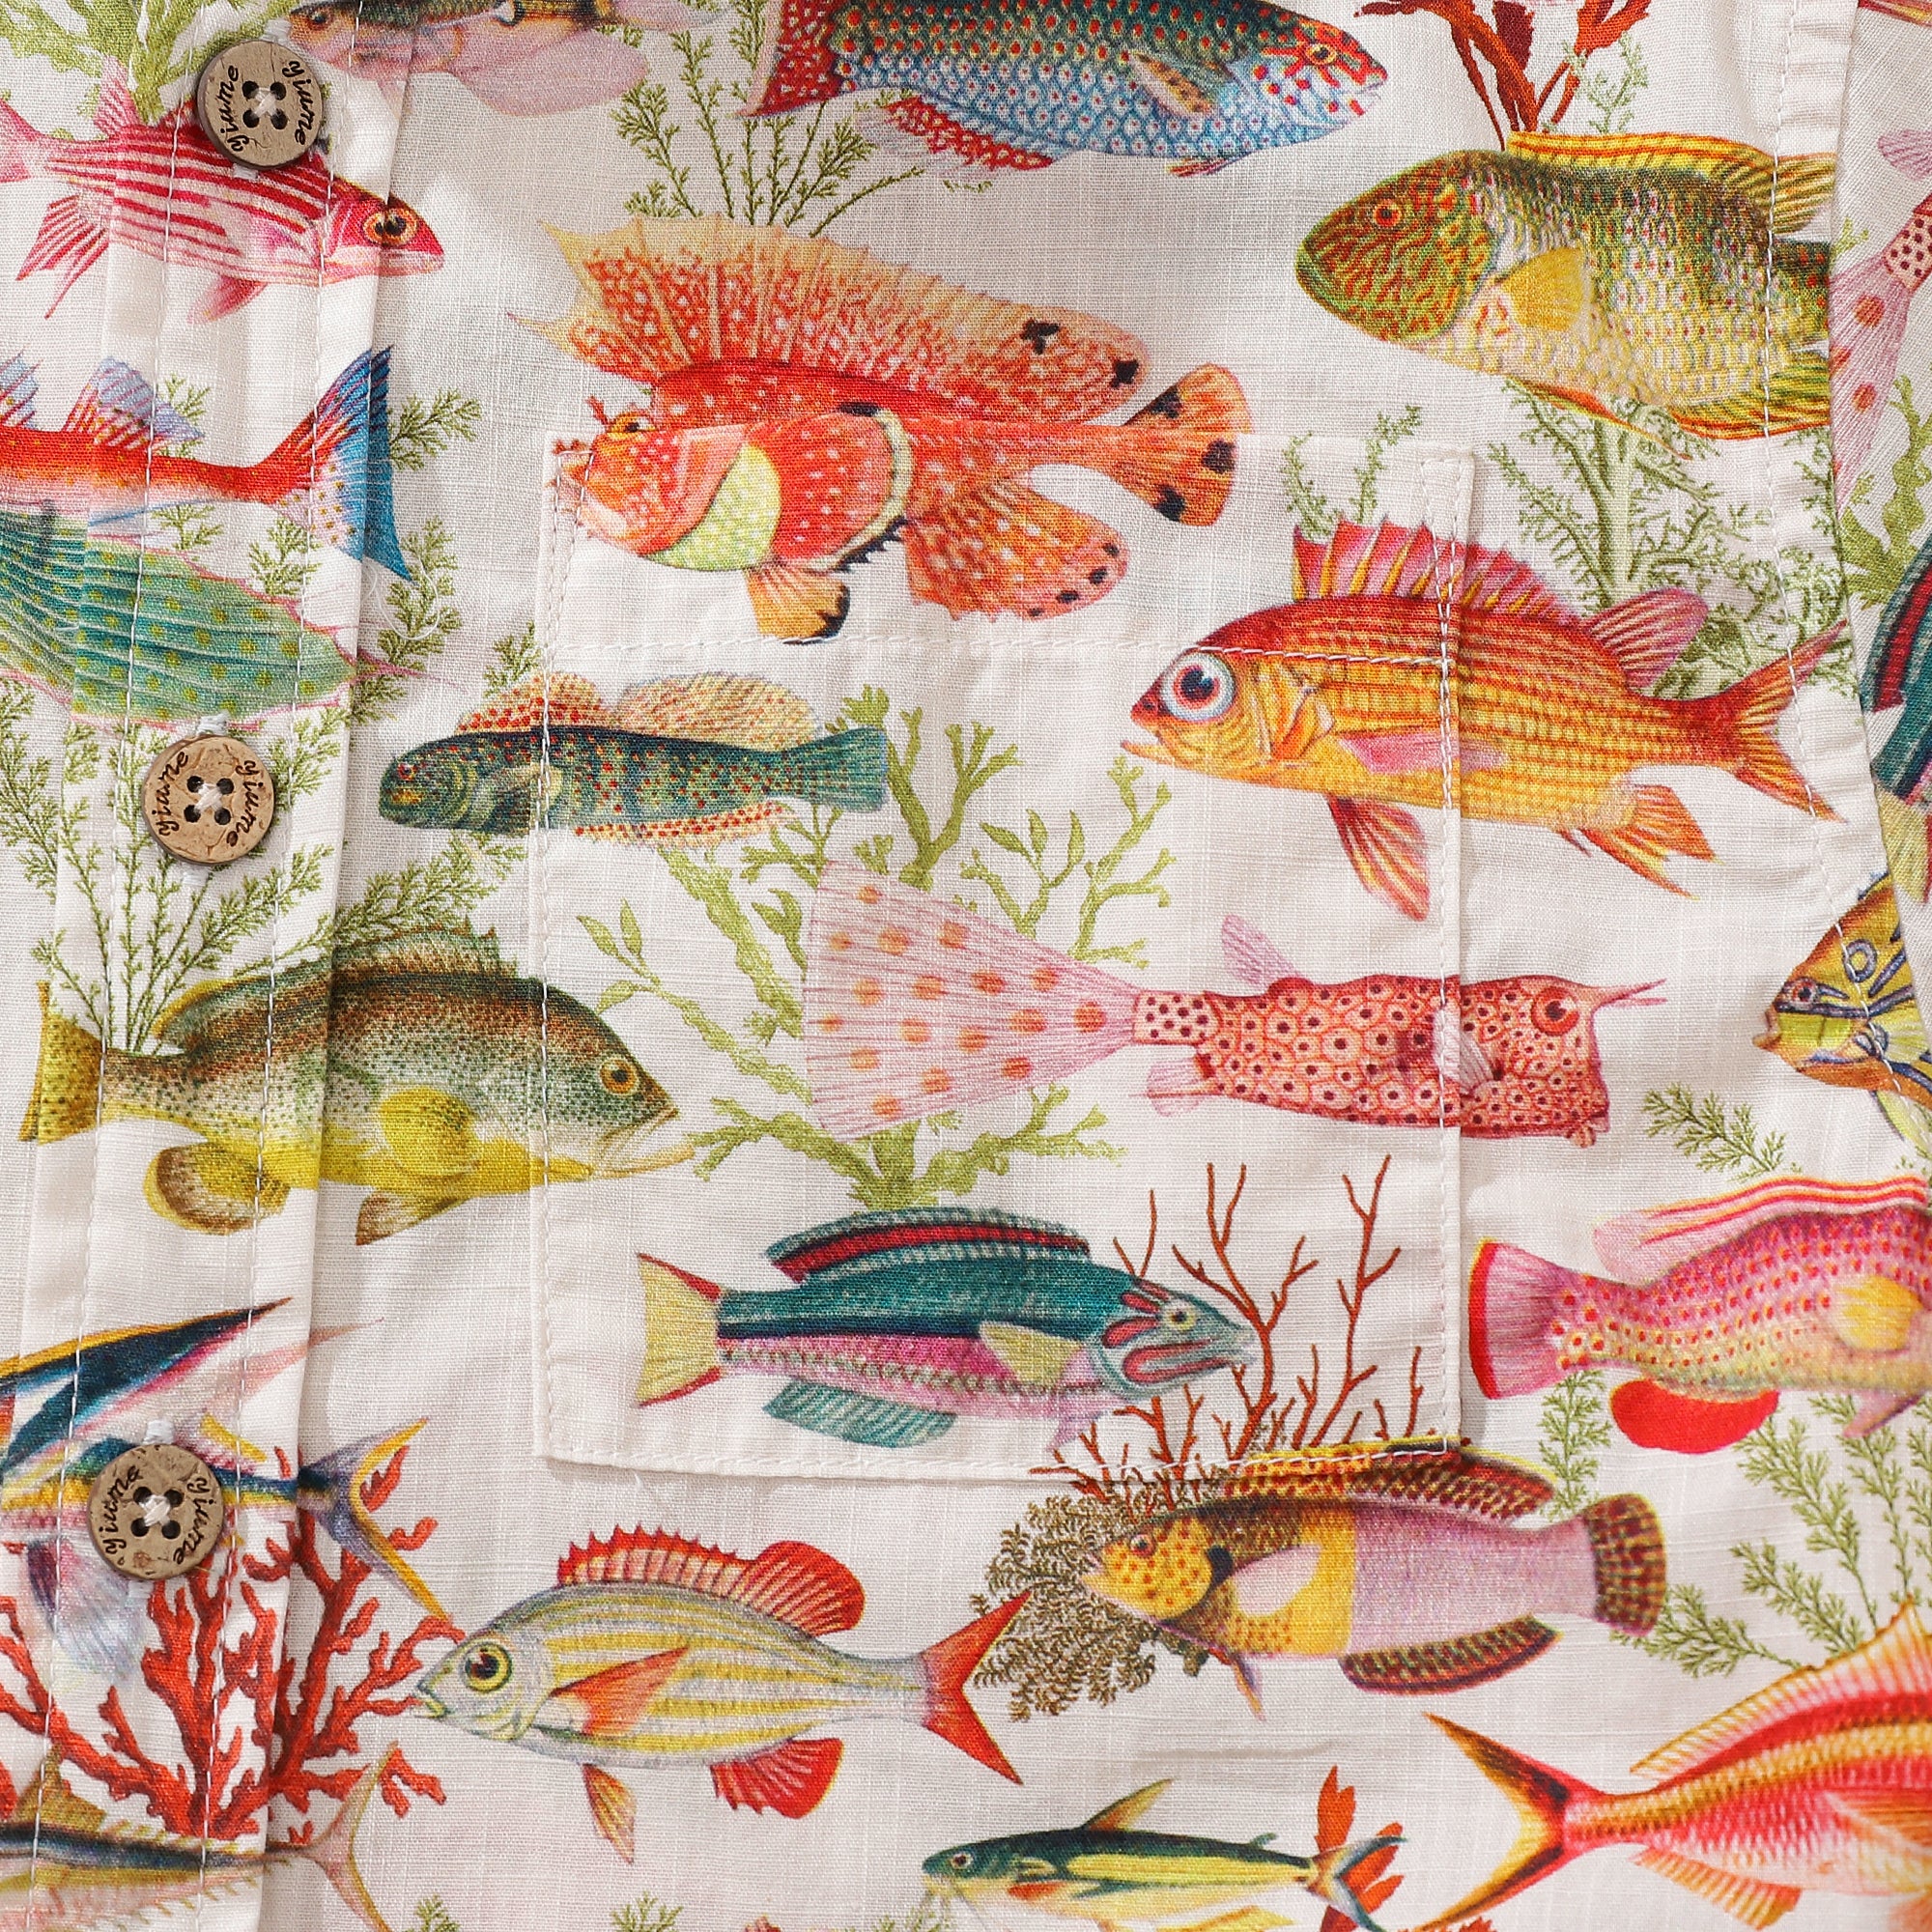 Children's Hawaiian Shirt Sea Ocean Fish Print Cotton Button-down Short Sleeve